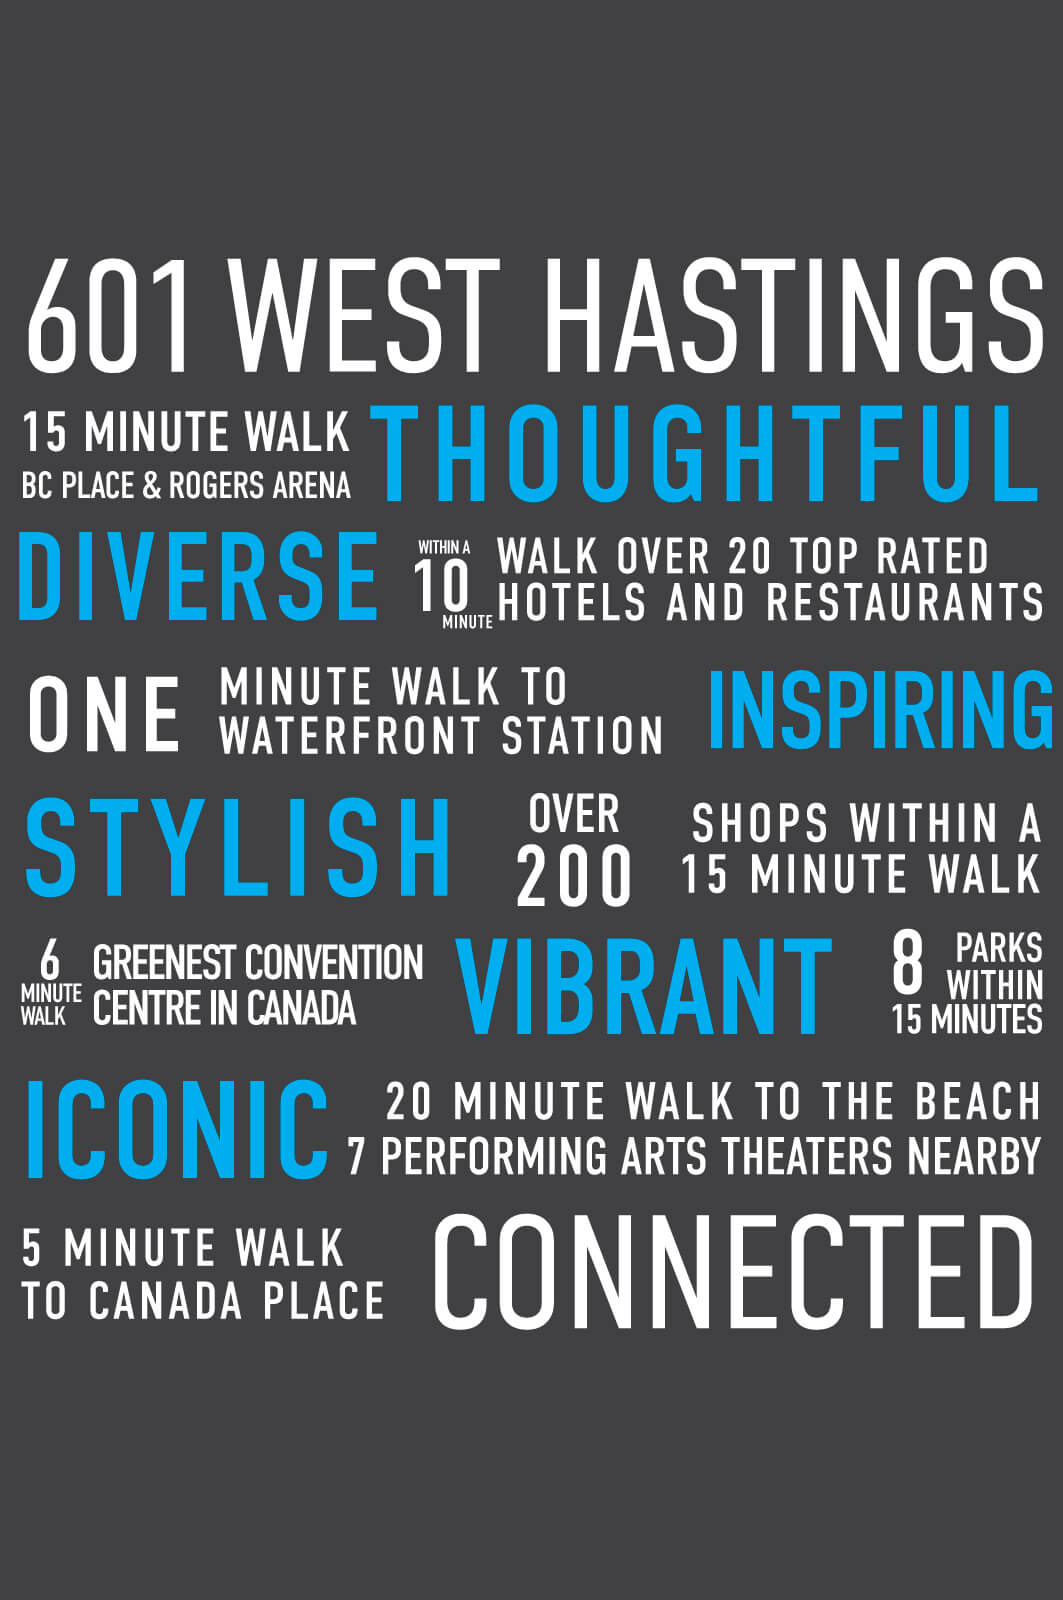 601 West Hastings Values